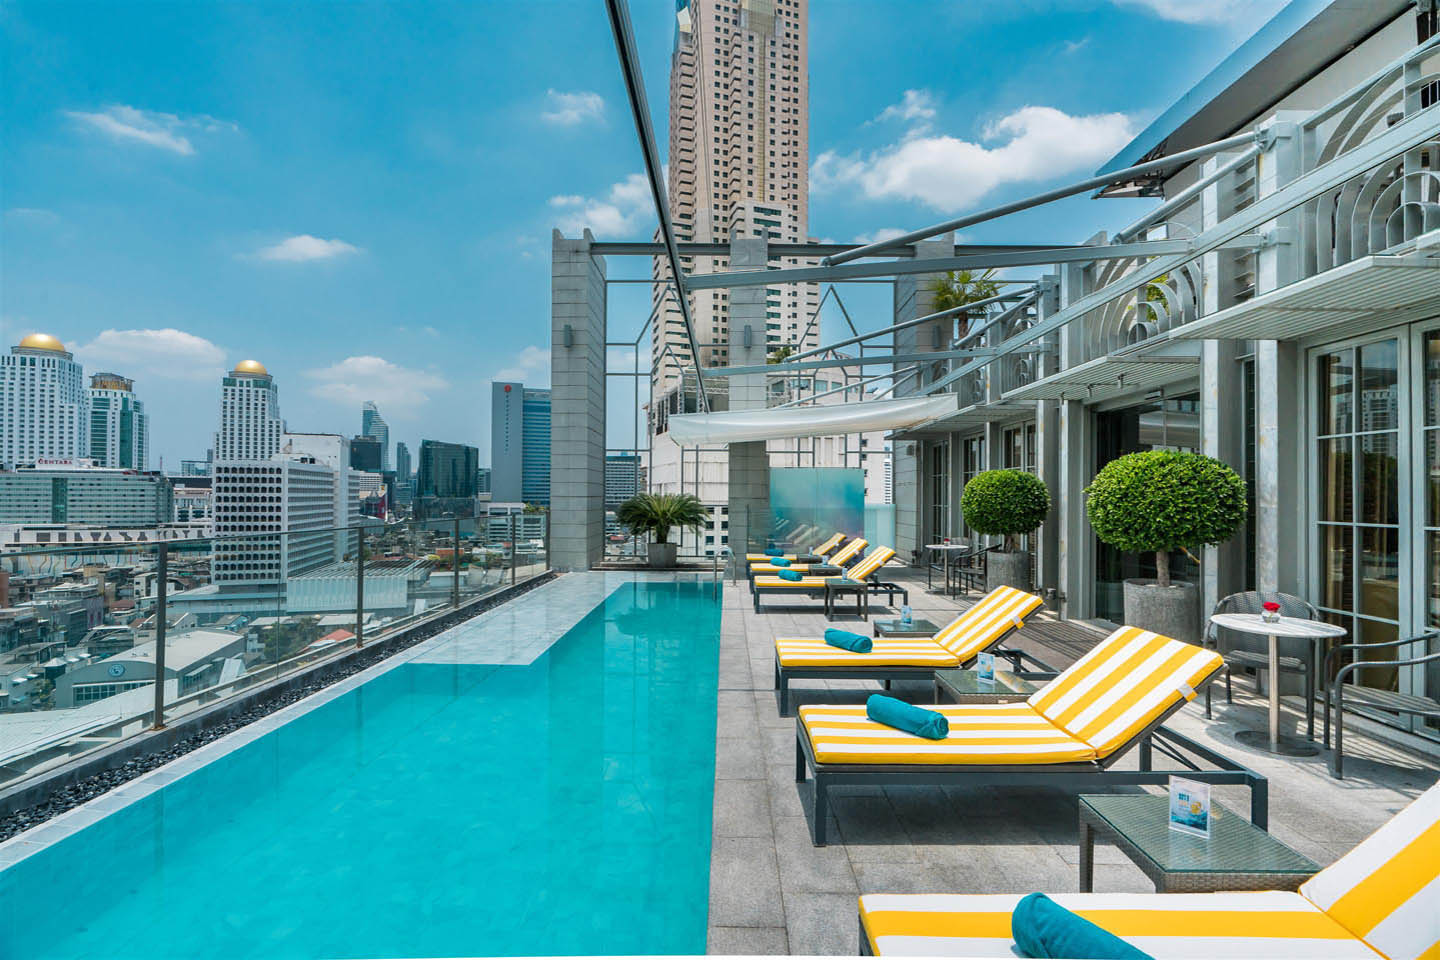 bangkok hotel near bts mrt - Akara Hotel Bangkok rooftop pool